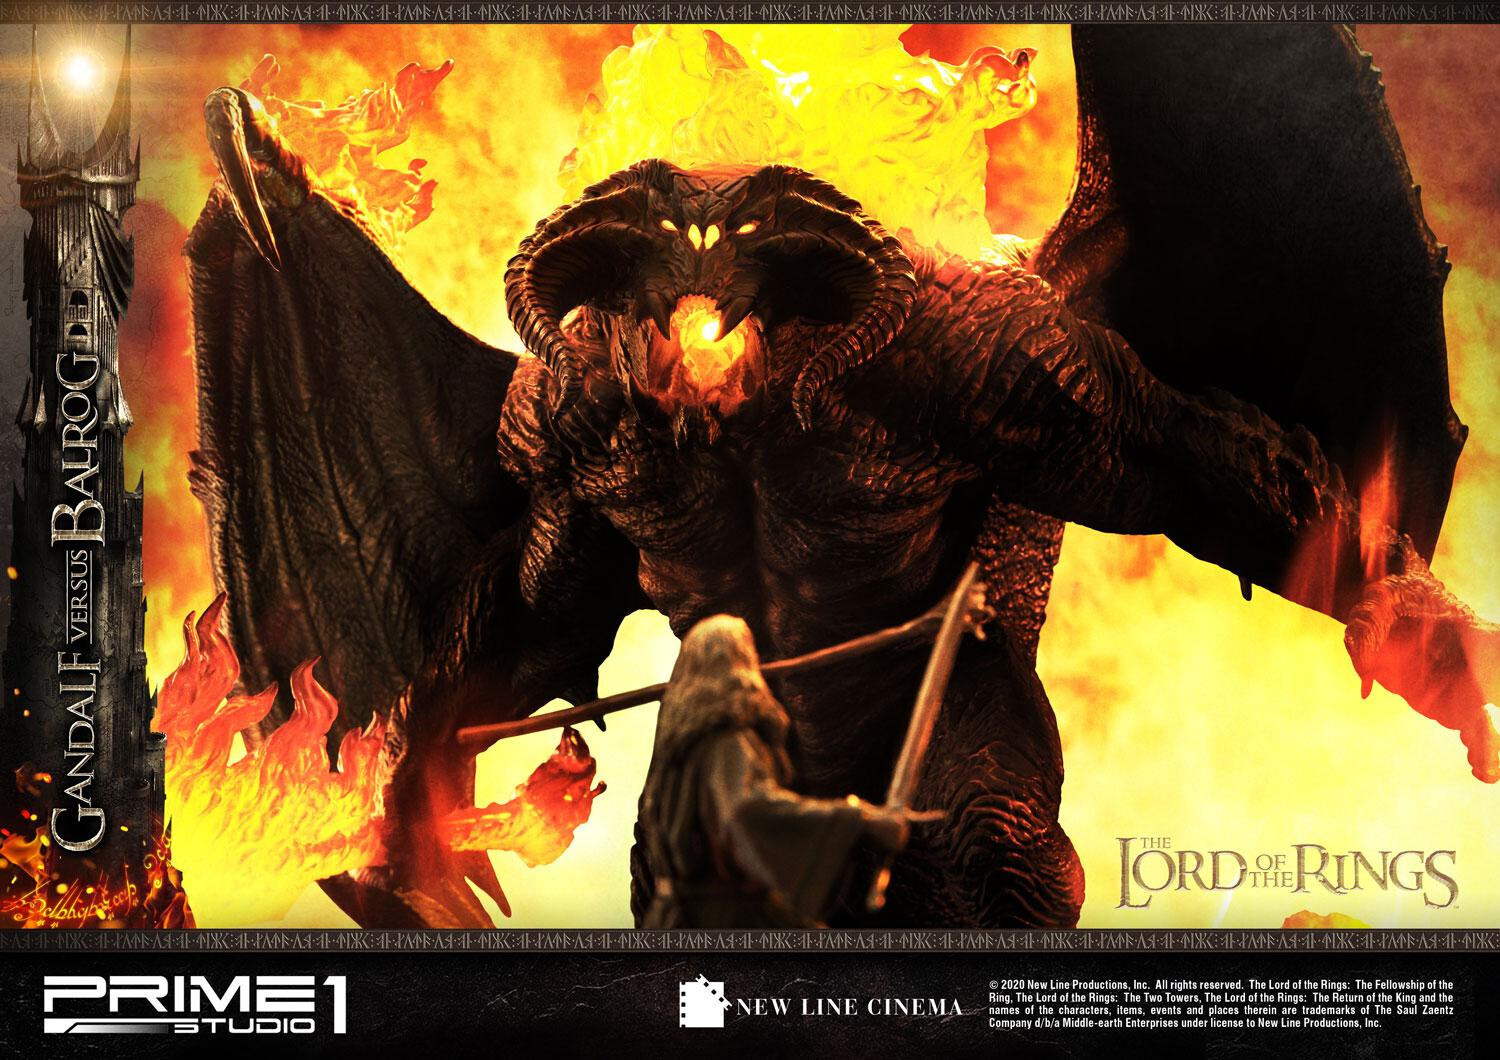 Prime 1 Studio - Gandalf Versus Balrog : The Lord of the Rings